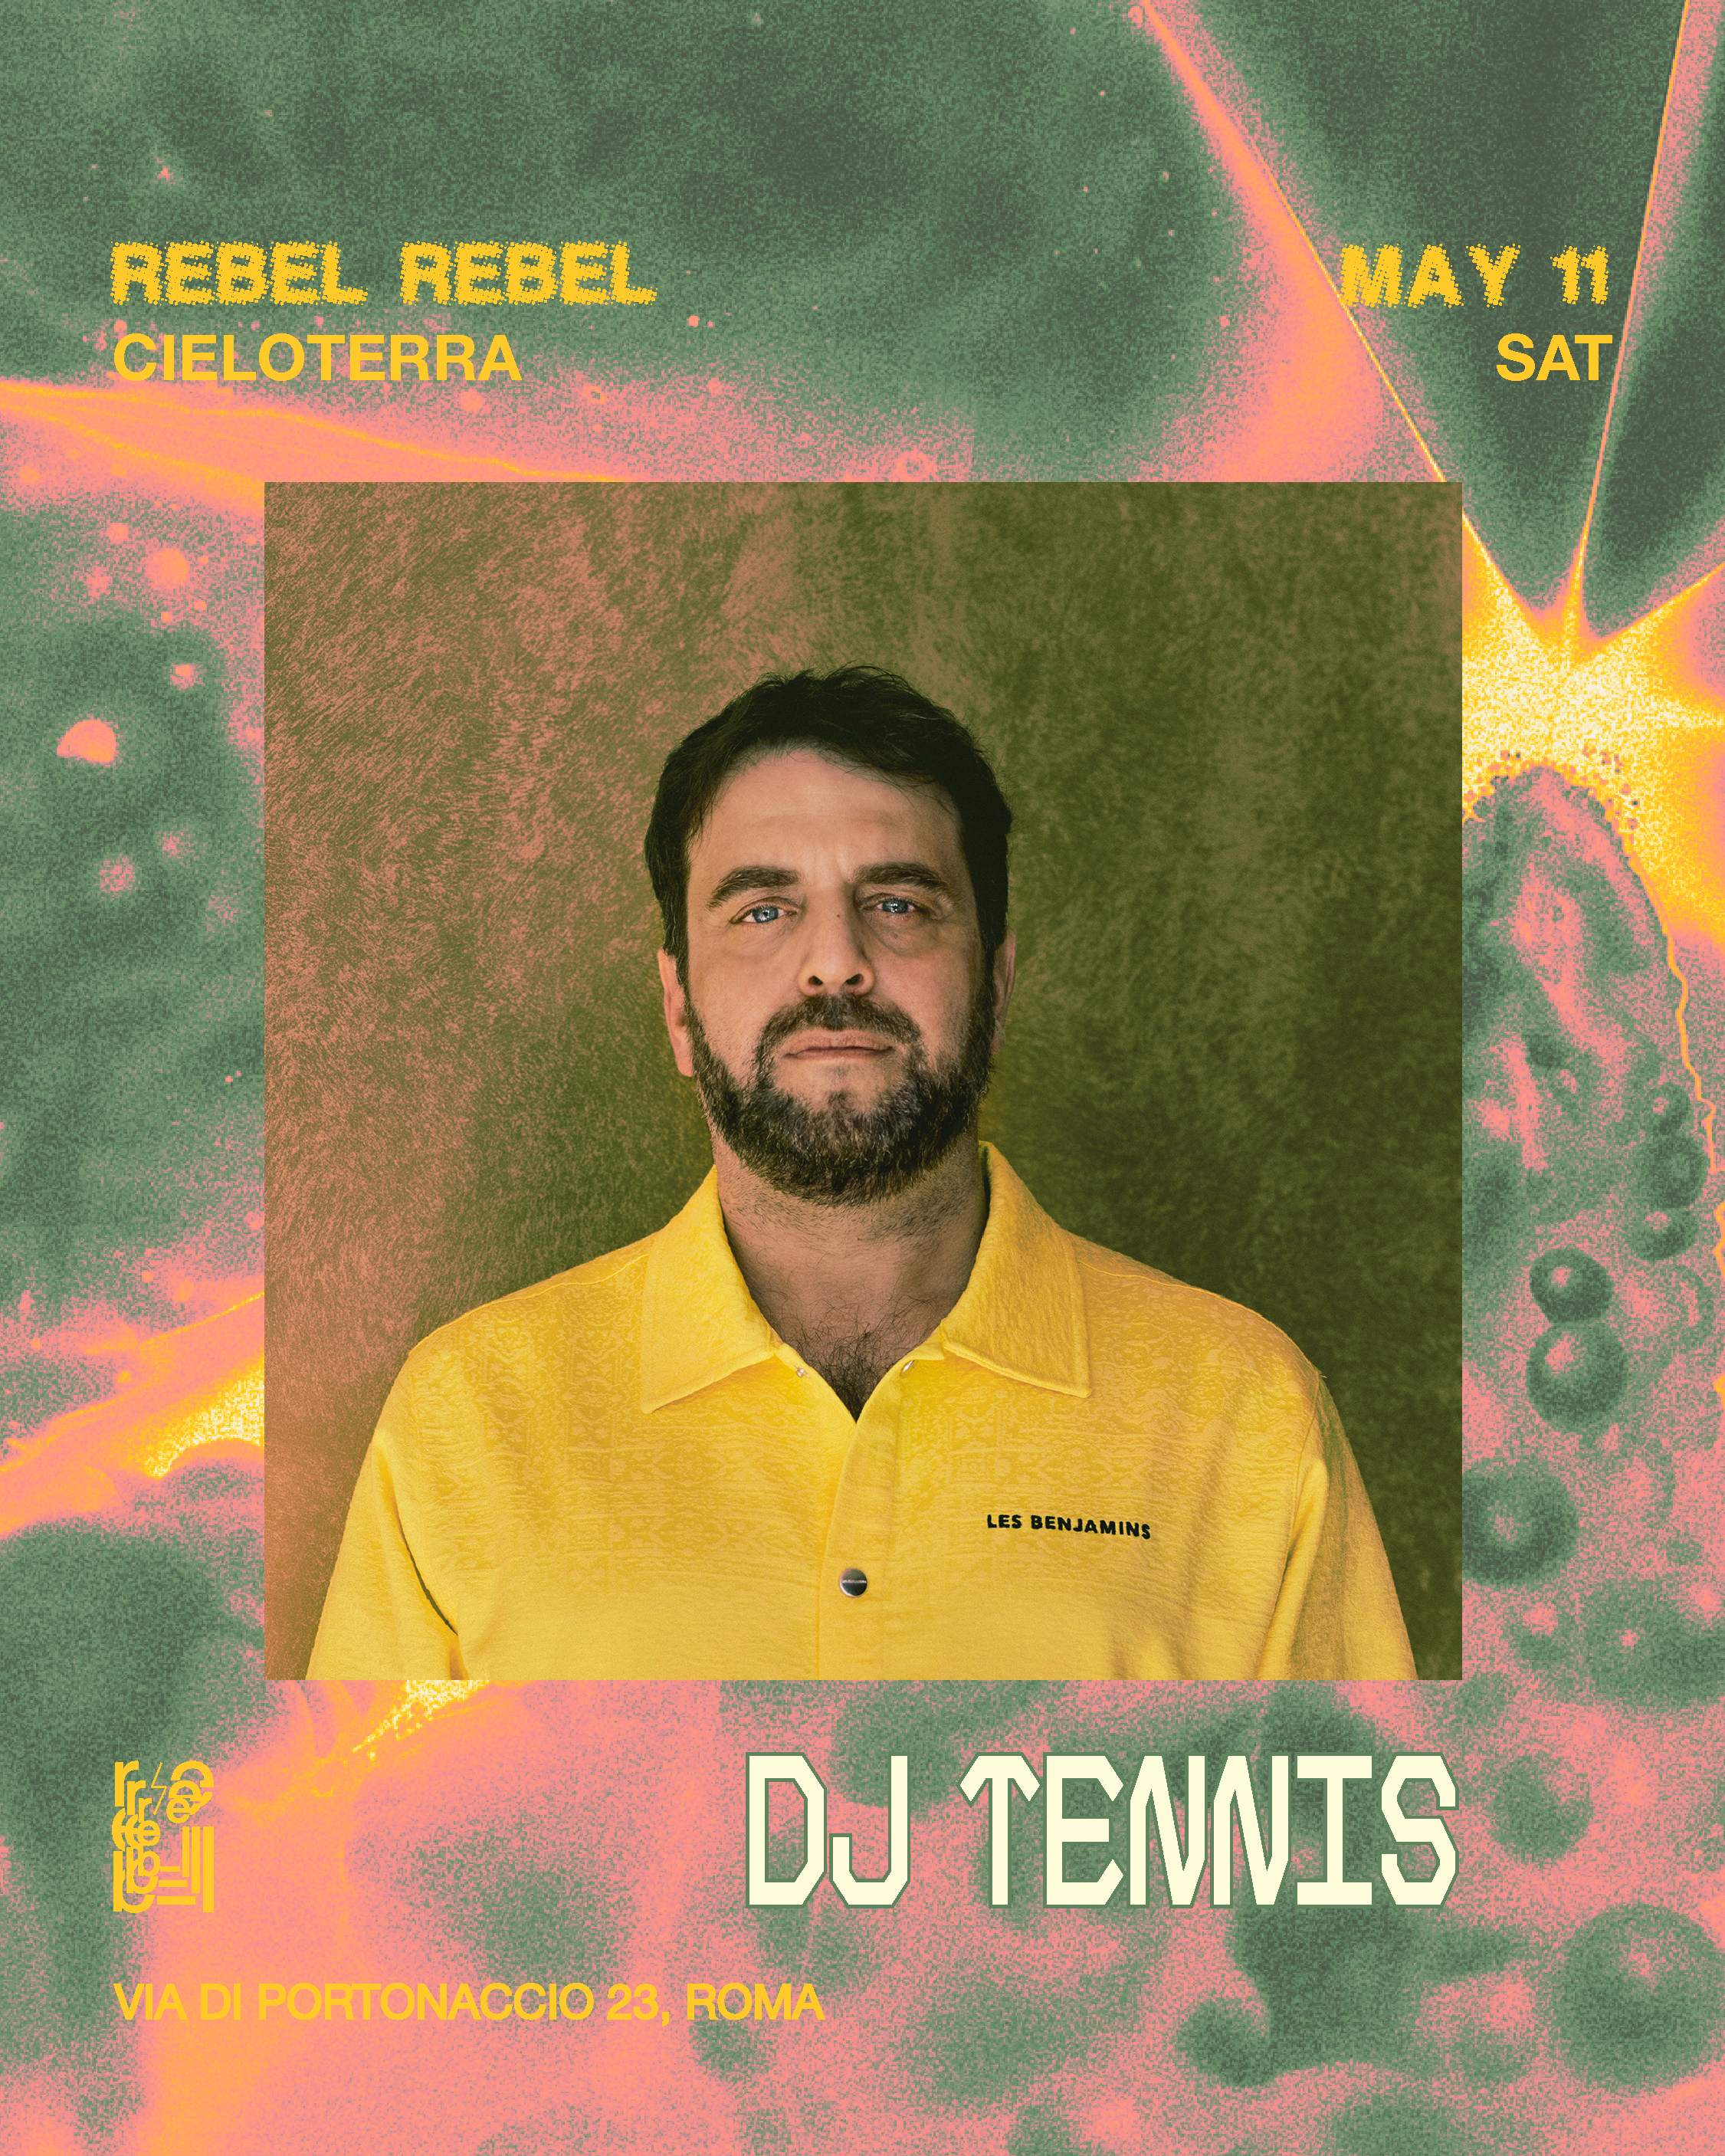 Rebel Rebel Closing party with DJ Tennis - フライヤー表